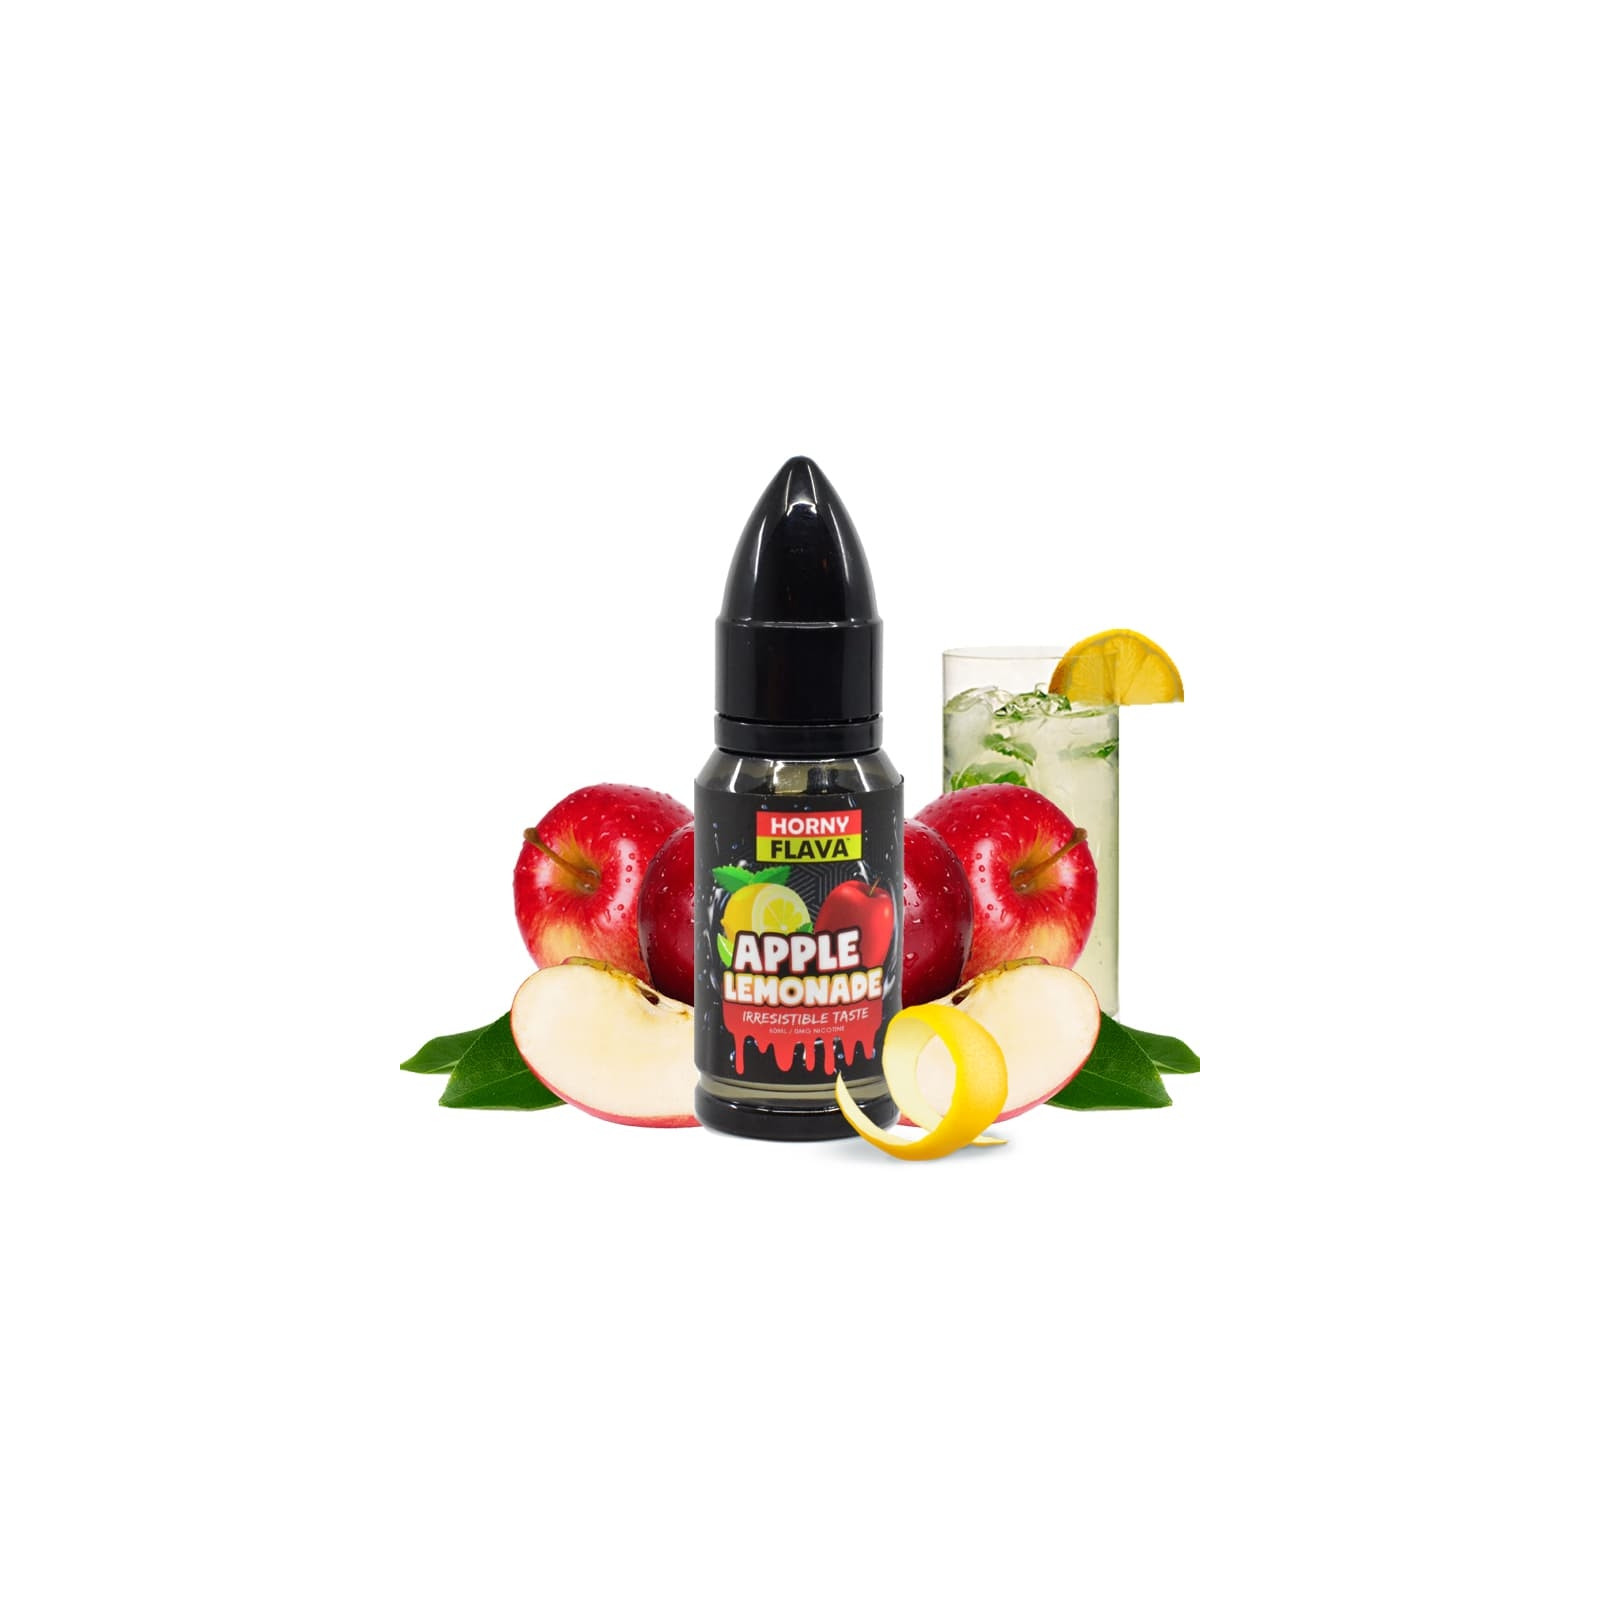 Apple Lemonade 65ml - Horny Flava